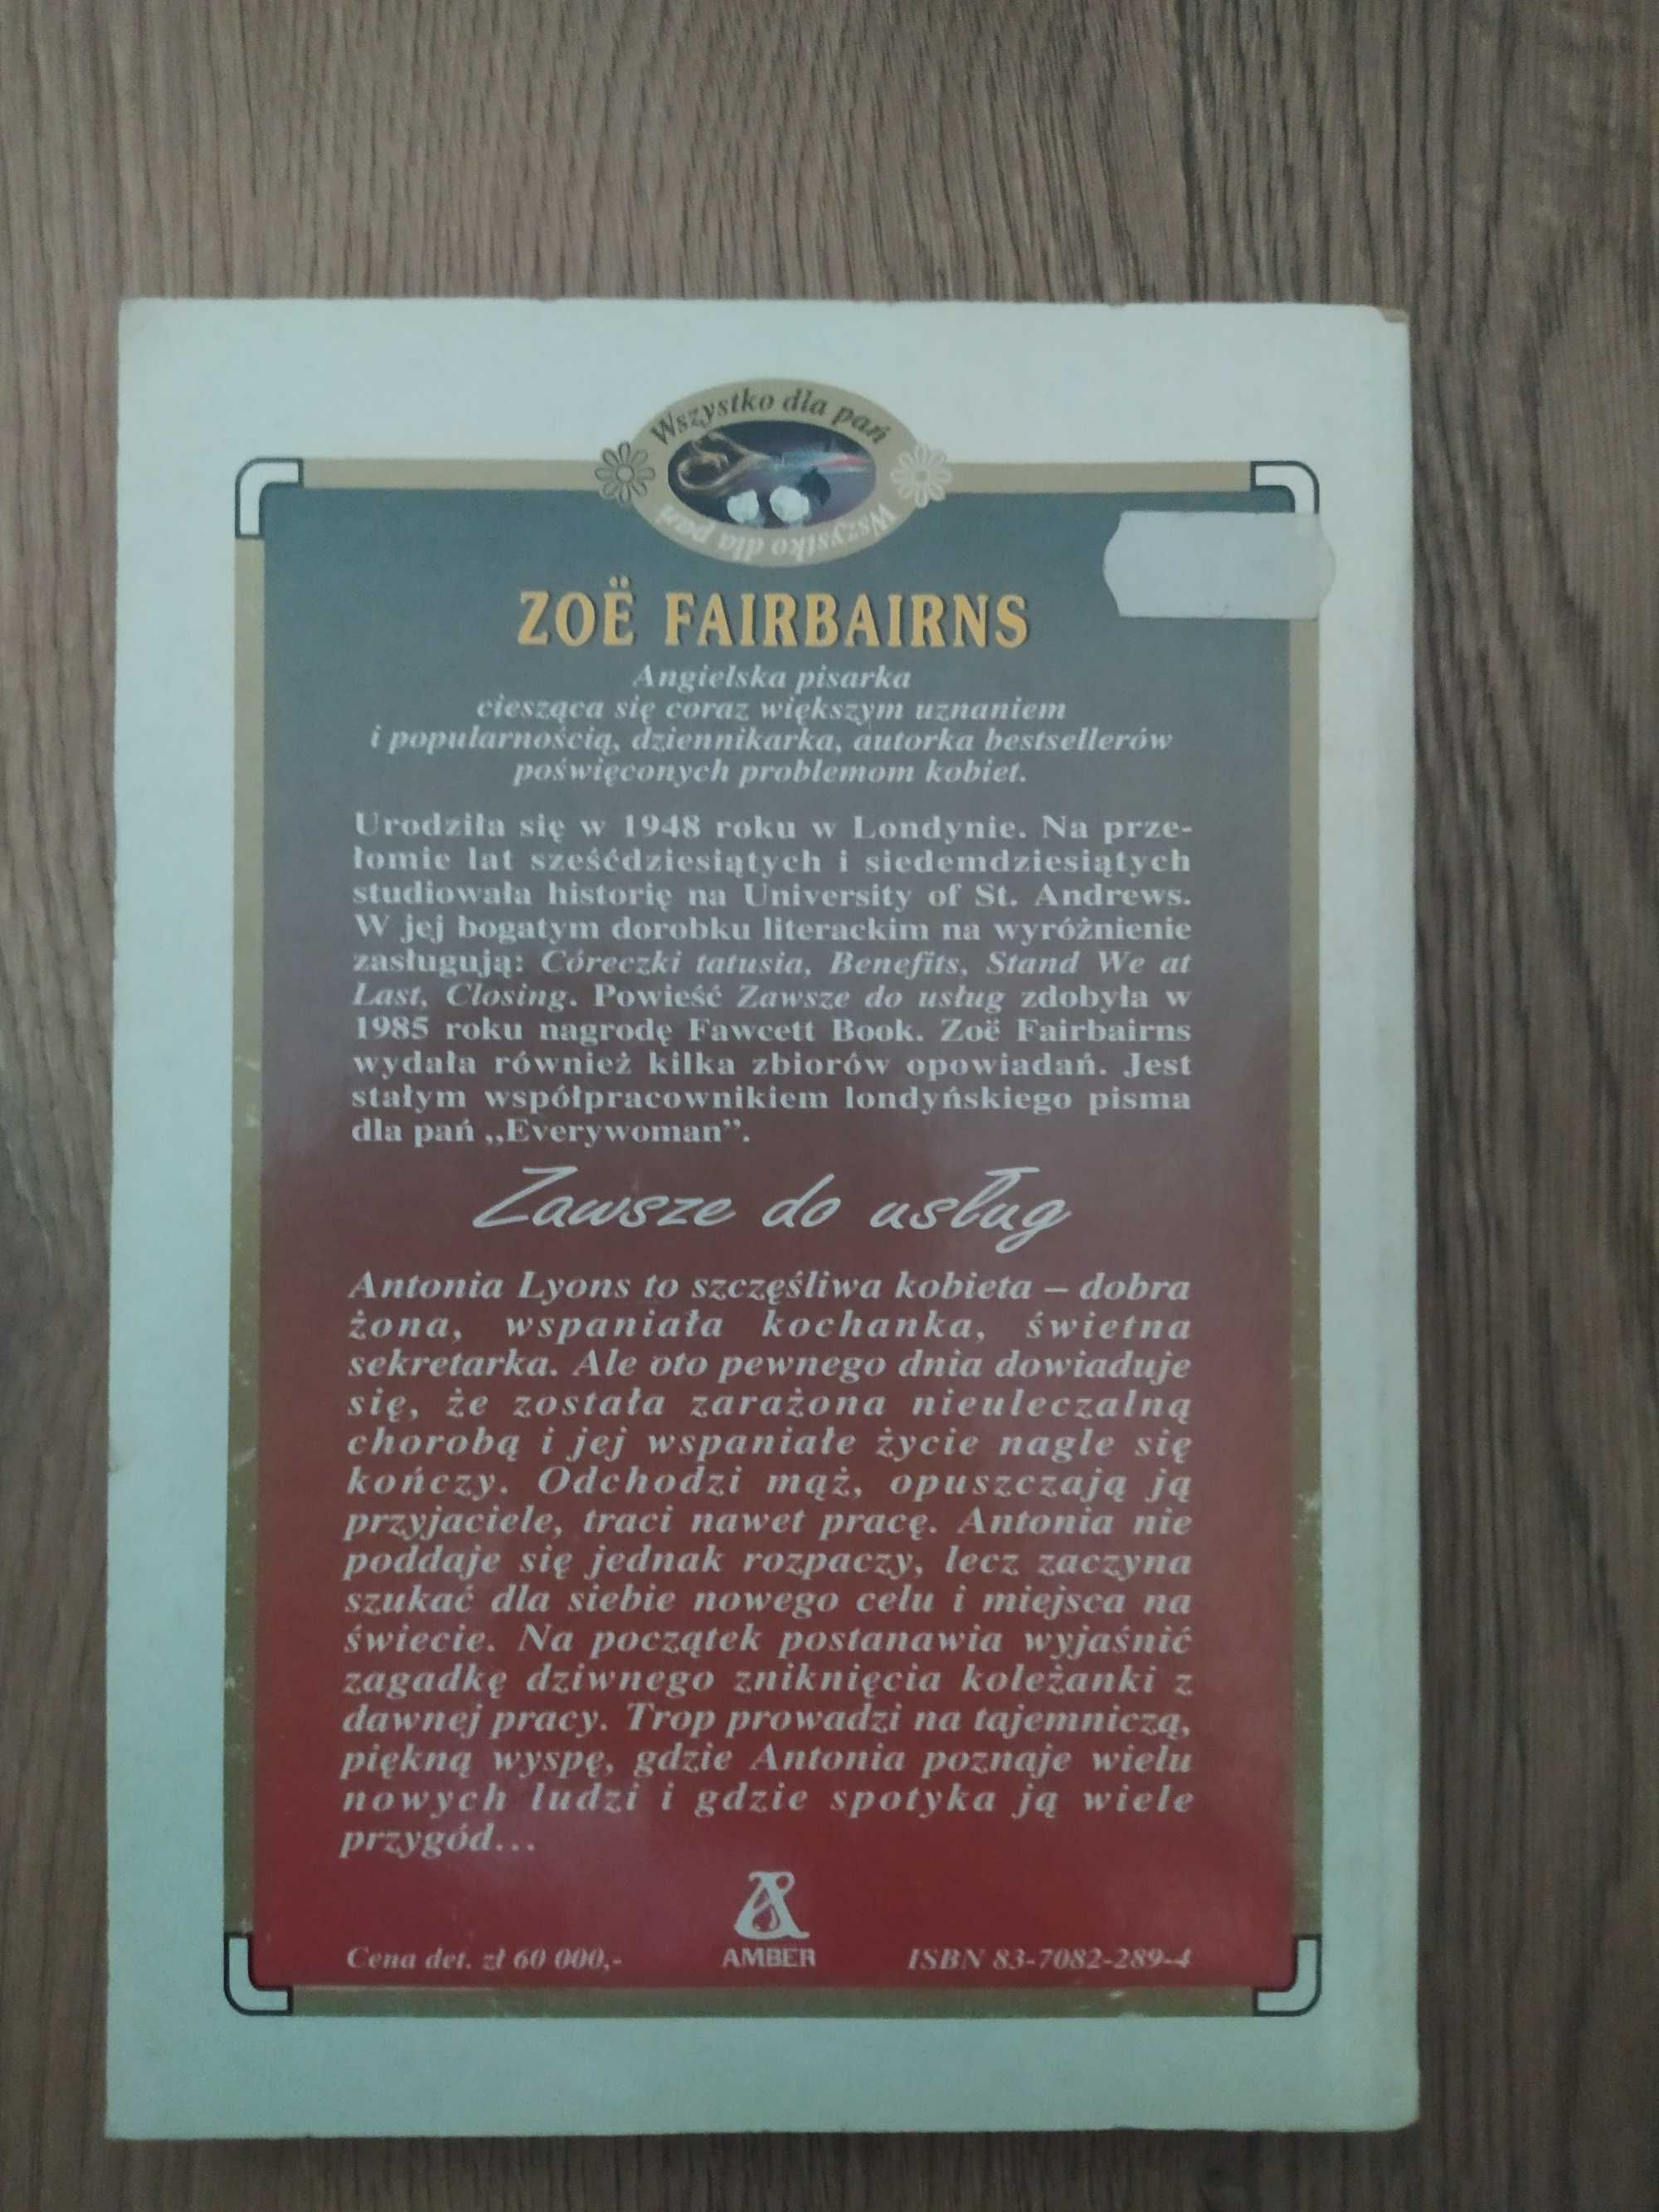 Zawsze do usług - Zoe Fairbairns